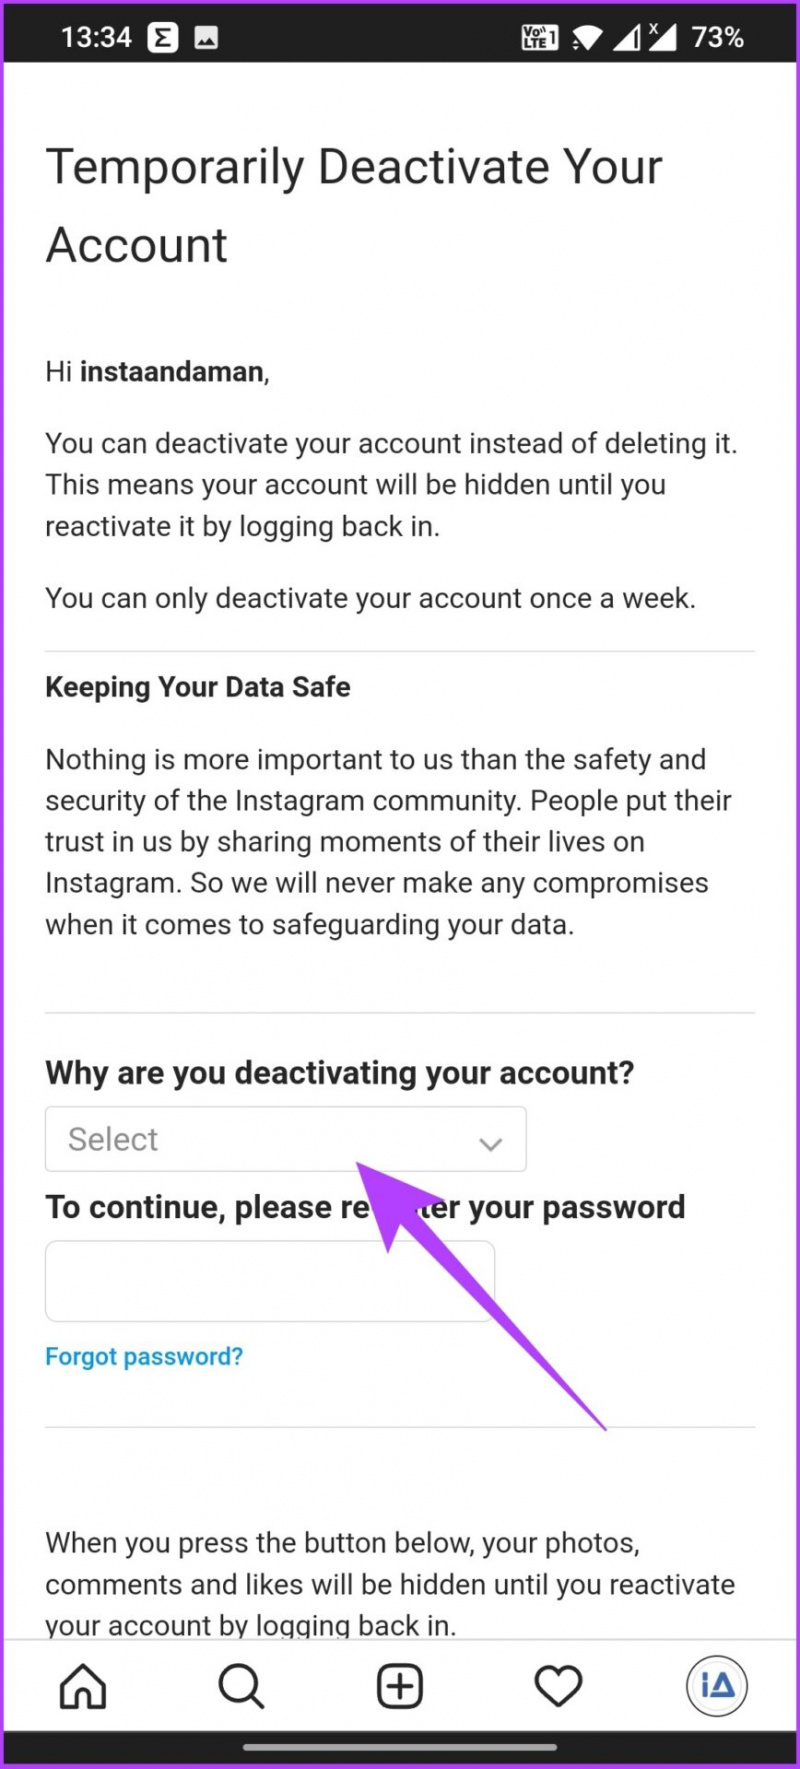   důvod deaktivace účtu Instagram Business